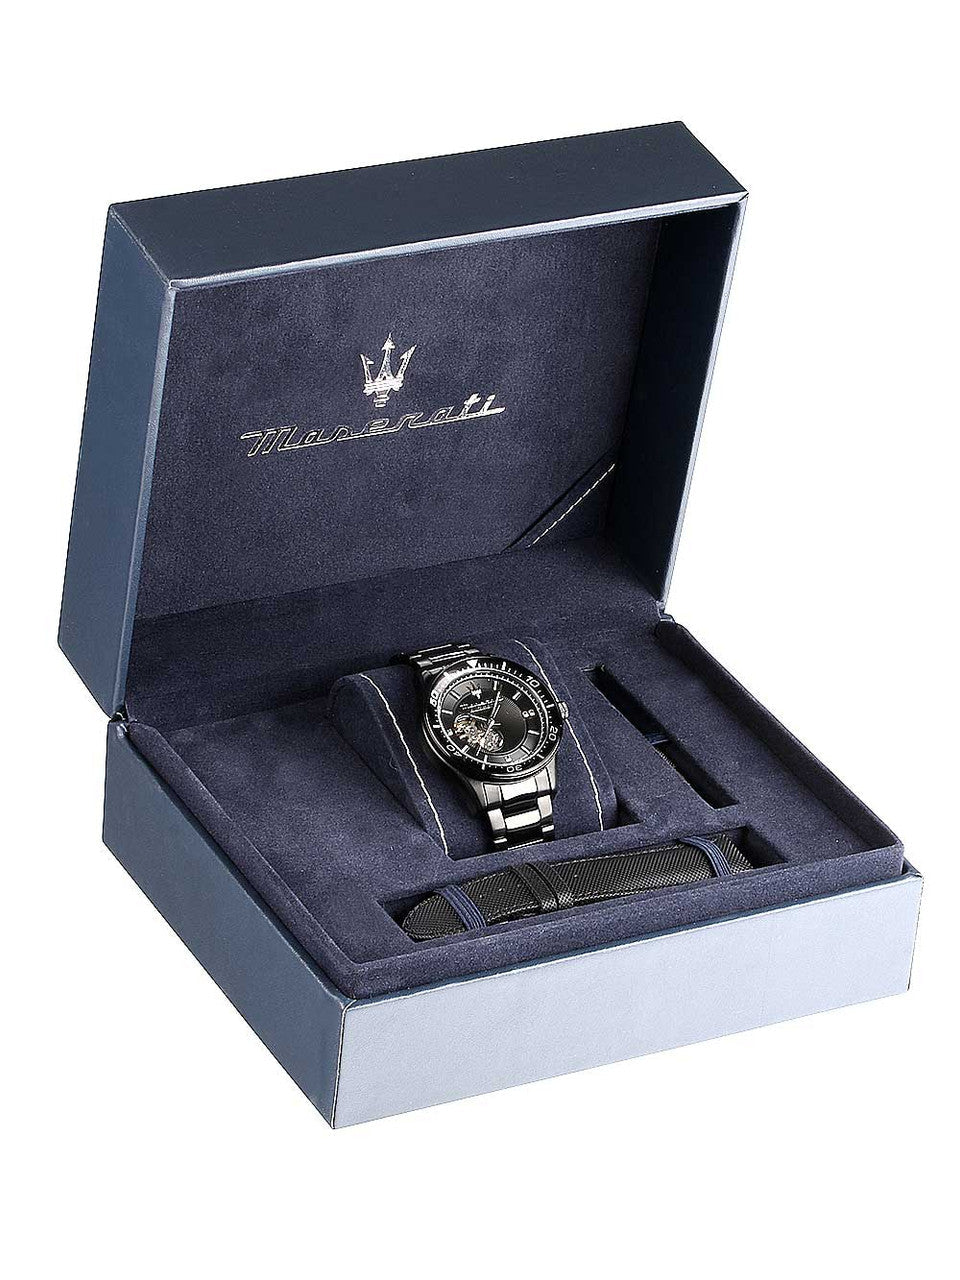 Maserati SFIDA Automatic Black Special Edition 44mm Watch For Men - R8823140005